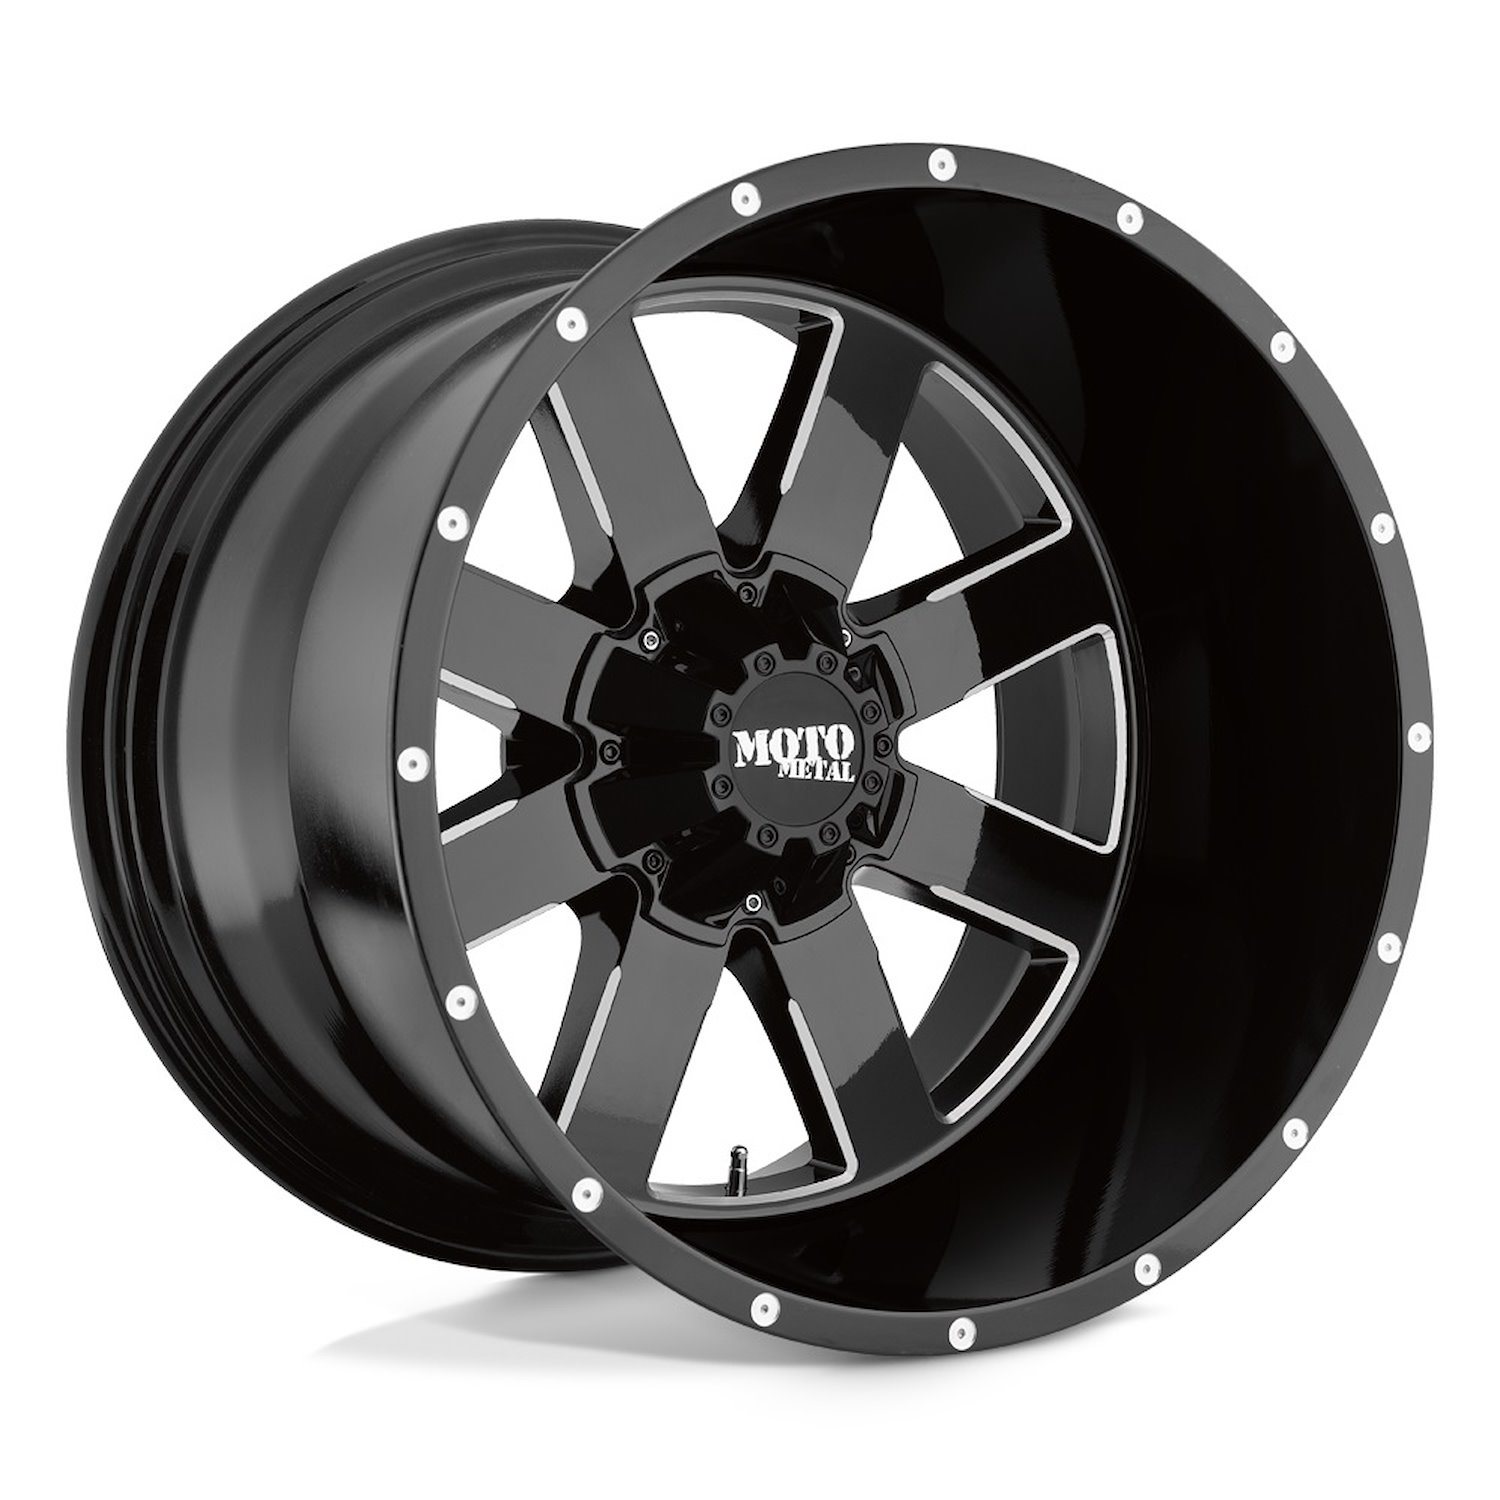 MO962 Moto-Metal Wheel, Size: 17x10", Bolt Pattern: 5x127.00/5x139.70 mm [Gloss Black] -24 mm Offset